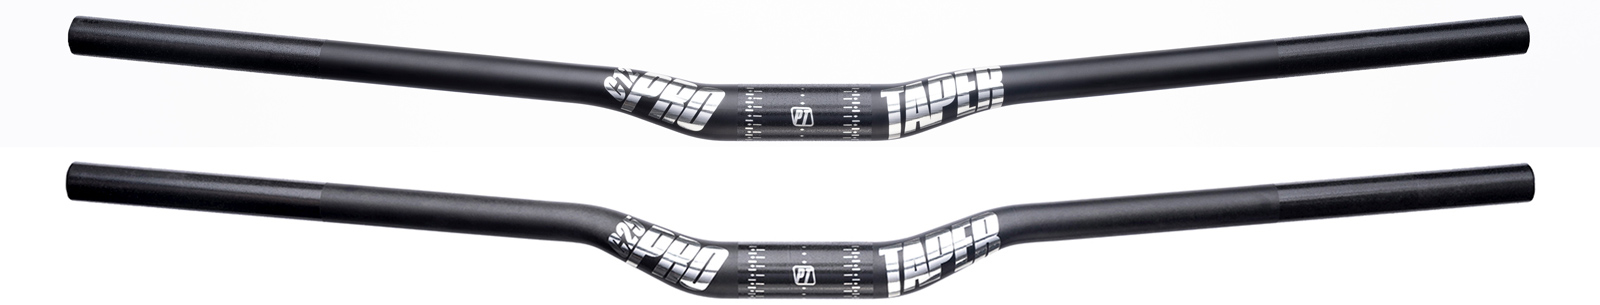 protaper carbon handlebars 12mm 25mm rise 31.8mm 35mm clamp lightweight